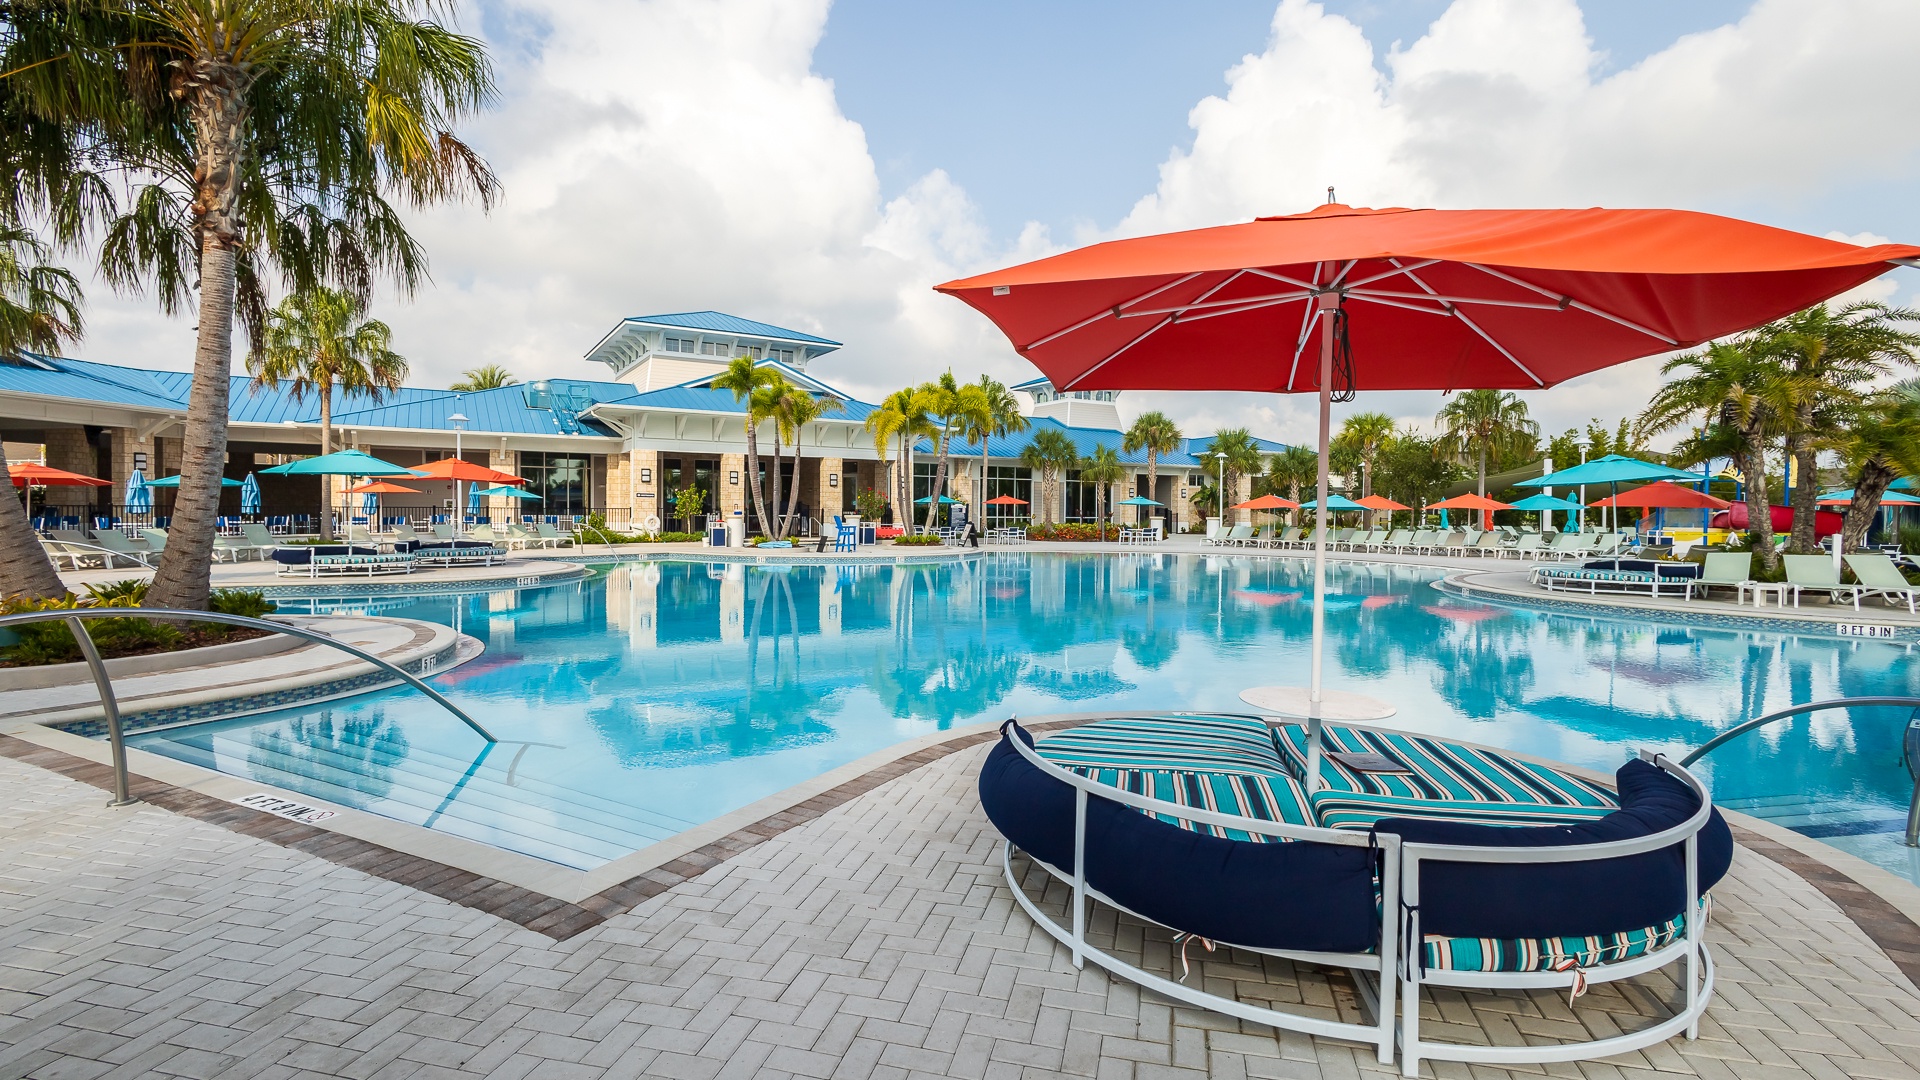 Enjoy the fabulous community amenities of Windsor Island Resort